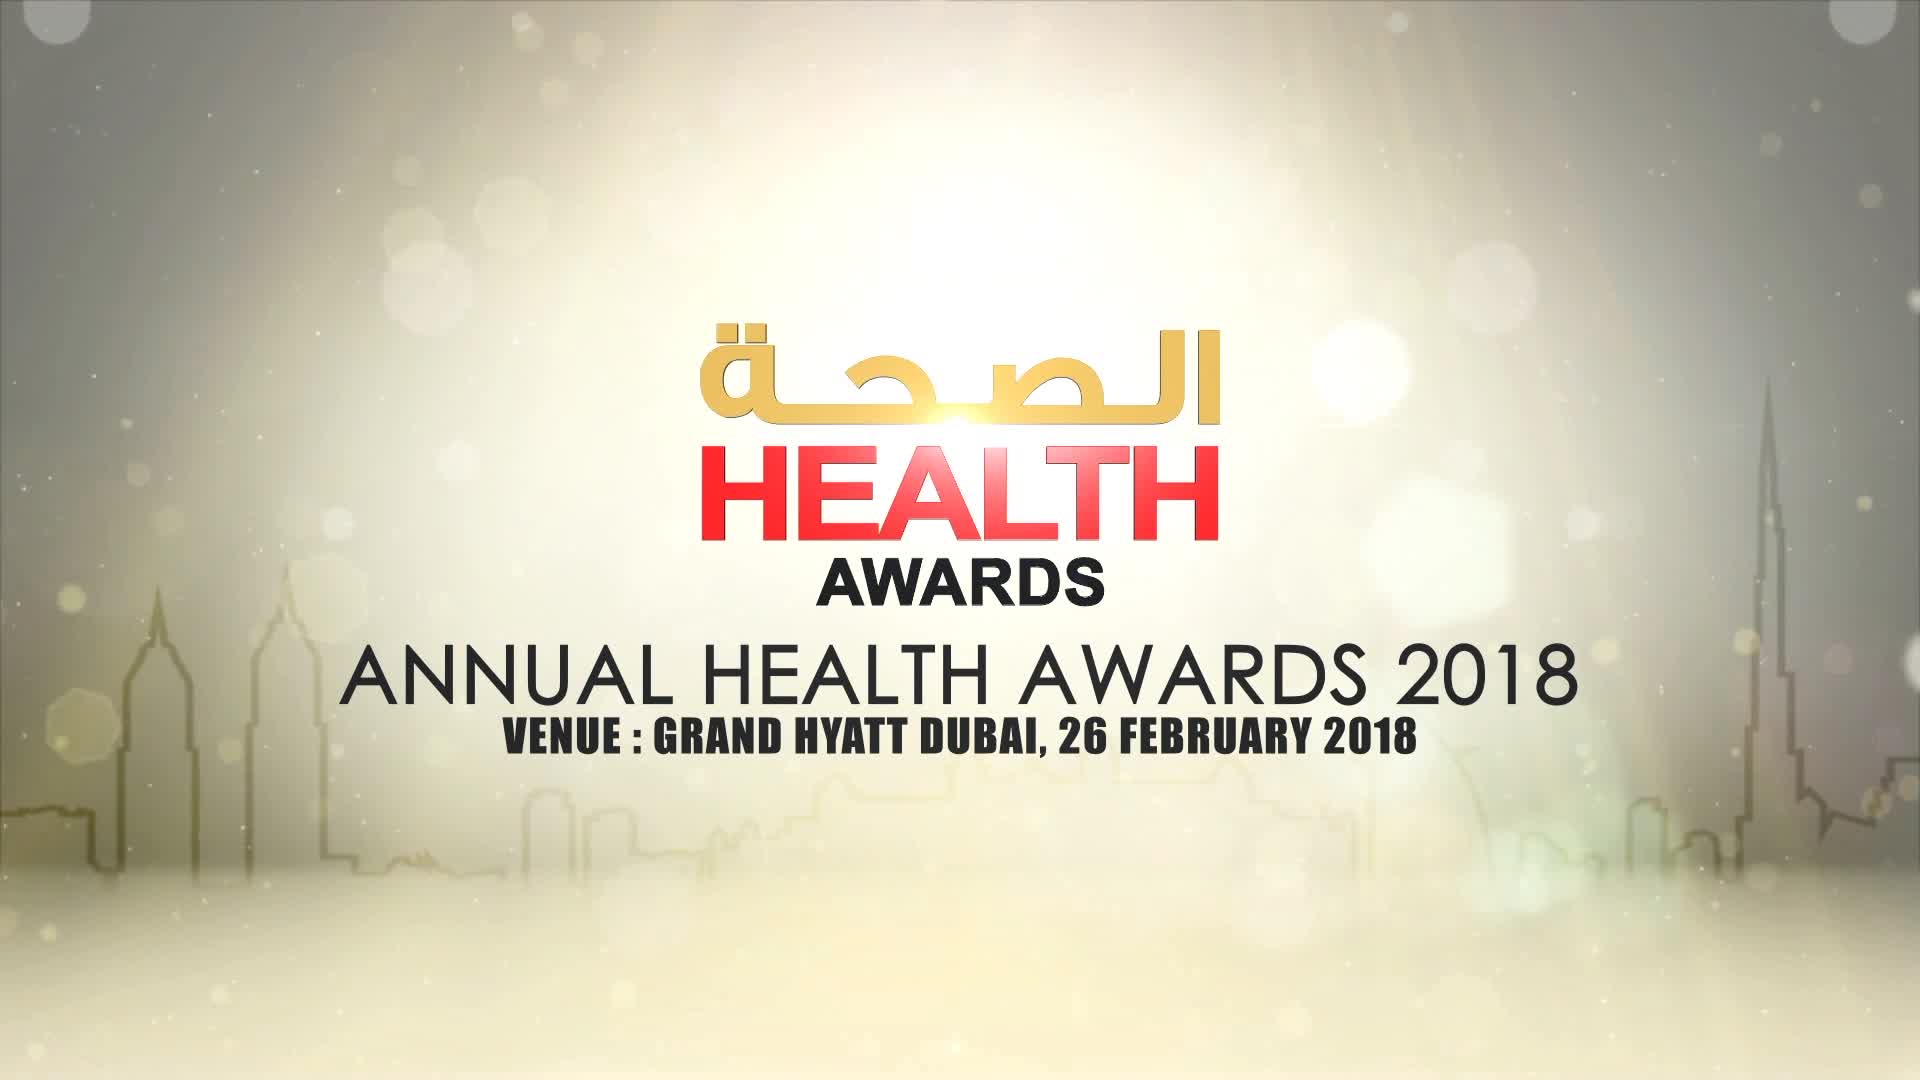 Thumbai_Annual Health Award 2018